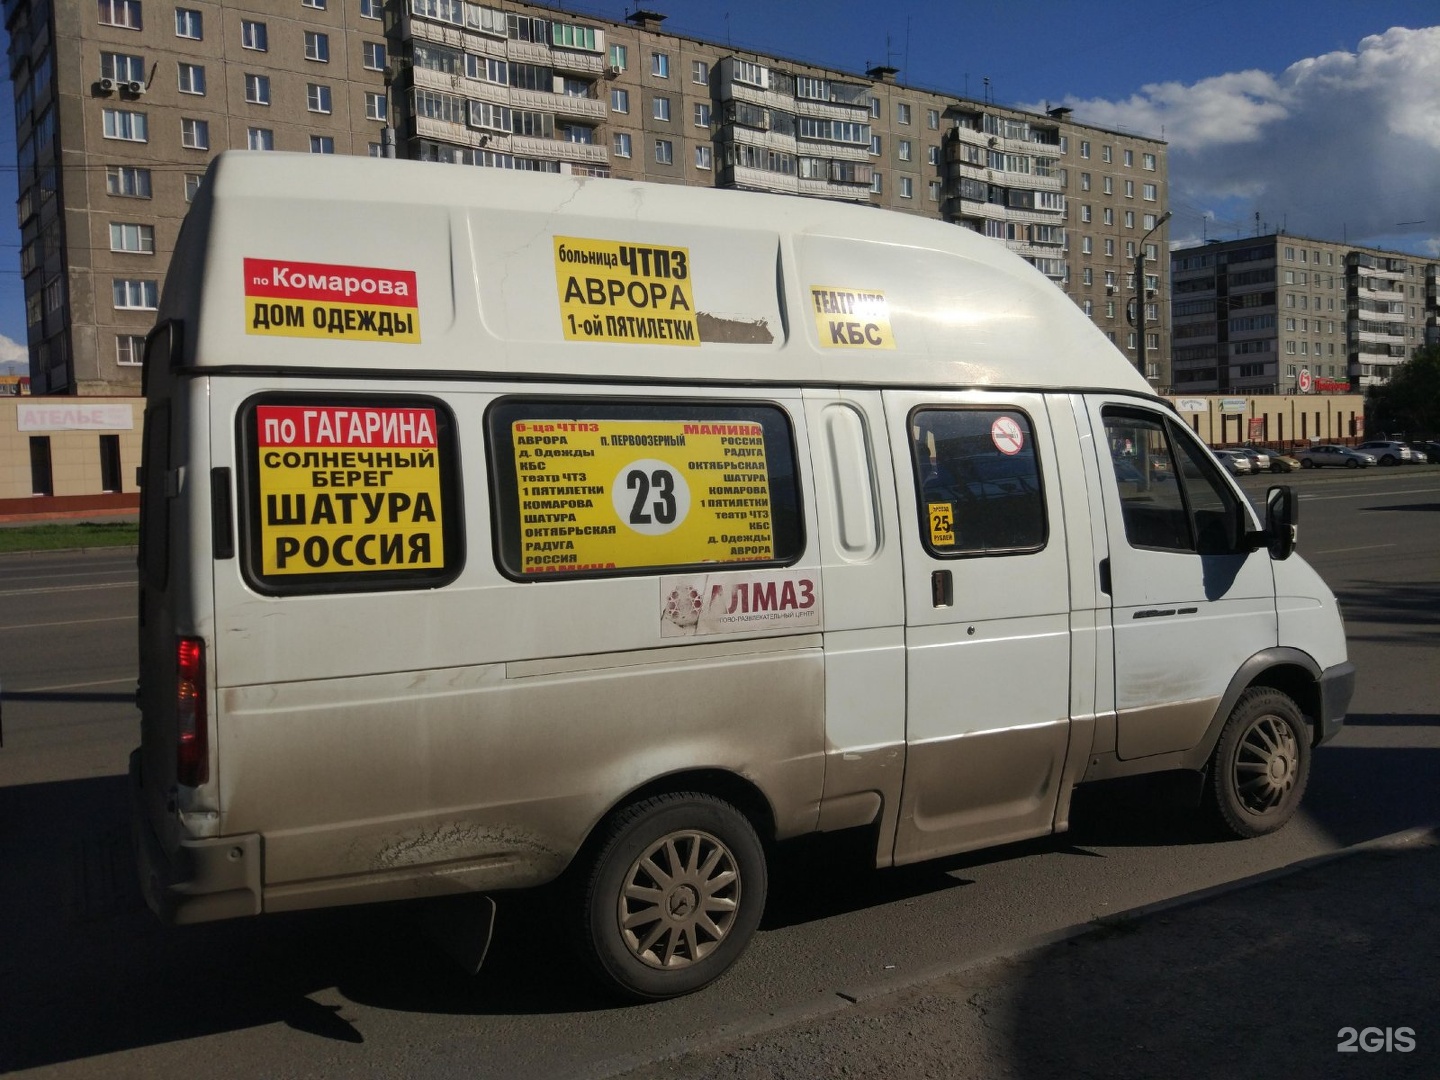 Маршрутное такси 16. Маршрутка. Маршрутное такси Челябинск. К32 маршрутное такси. Челябинское маршрутное такси.